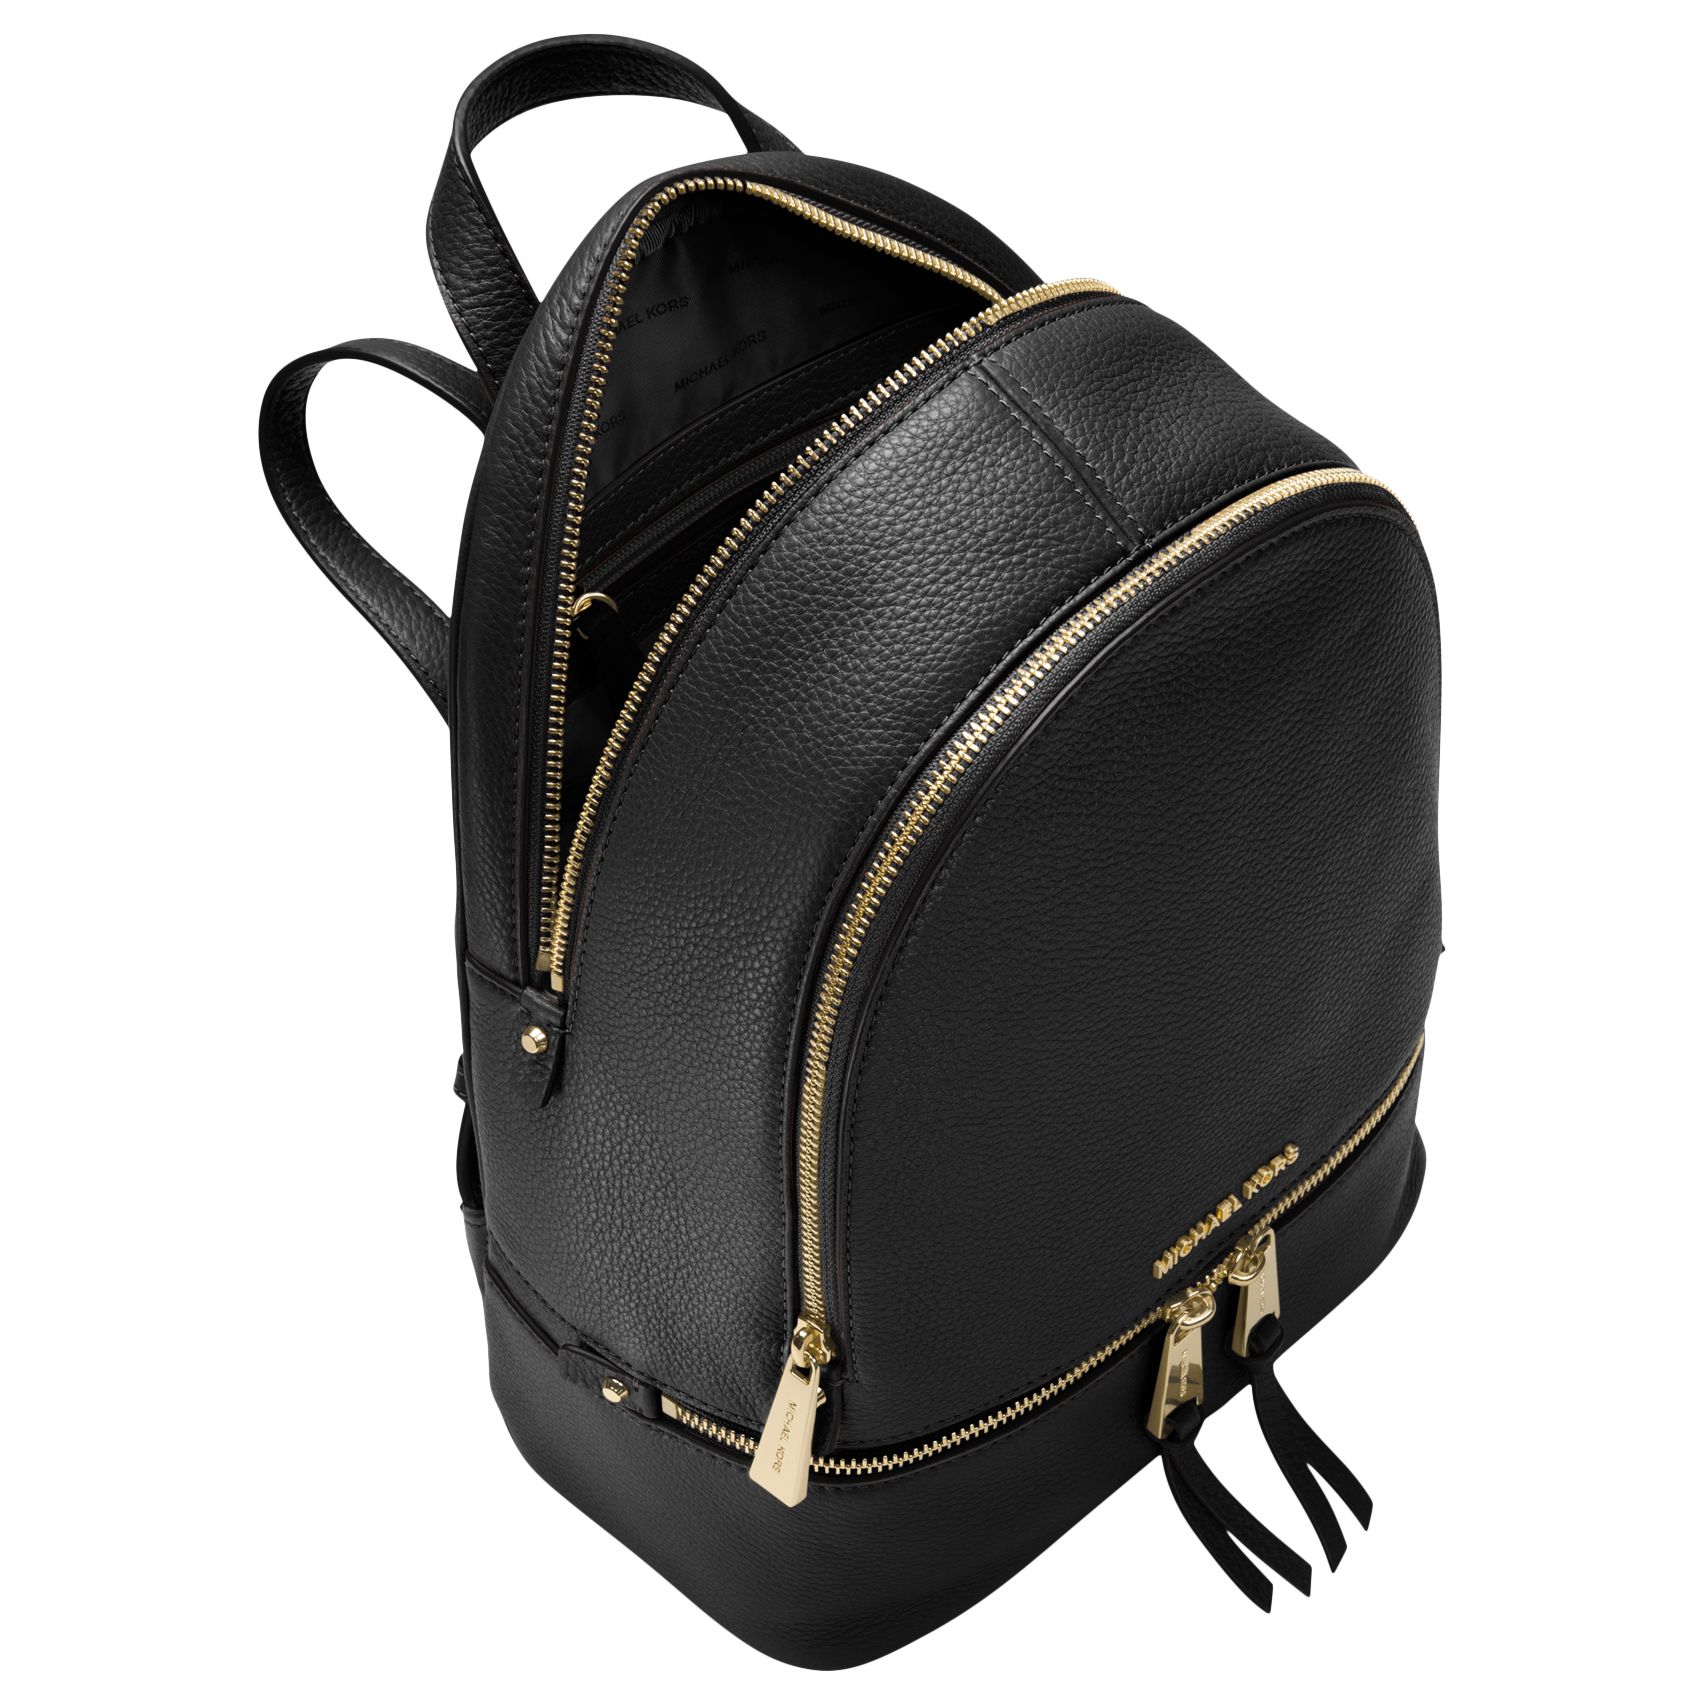 MICHAEL Michael Kors Rhea Leather Backpack, Black at John Lewis & Partners